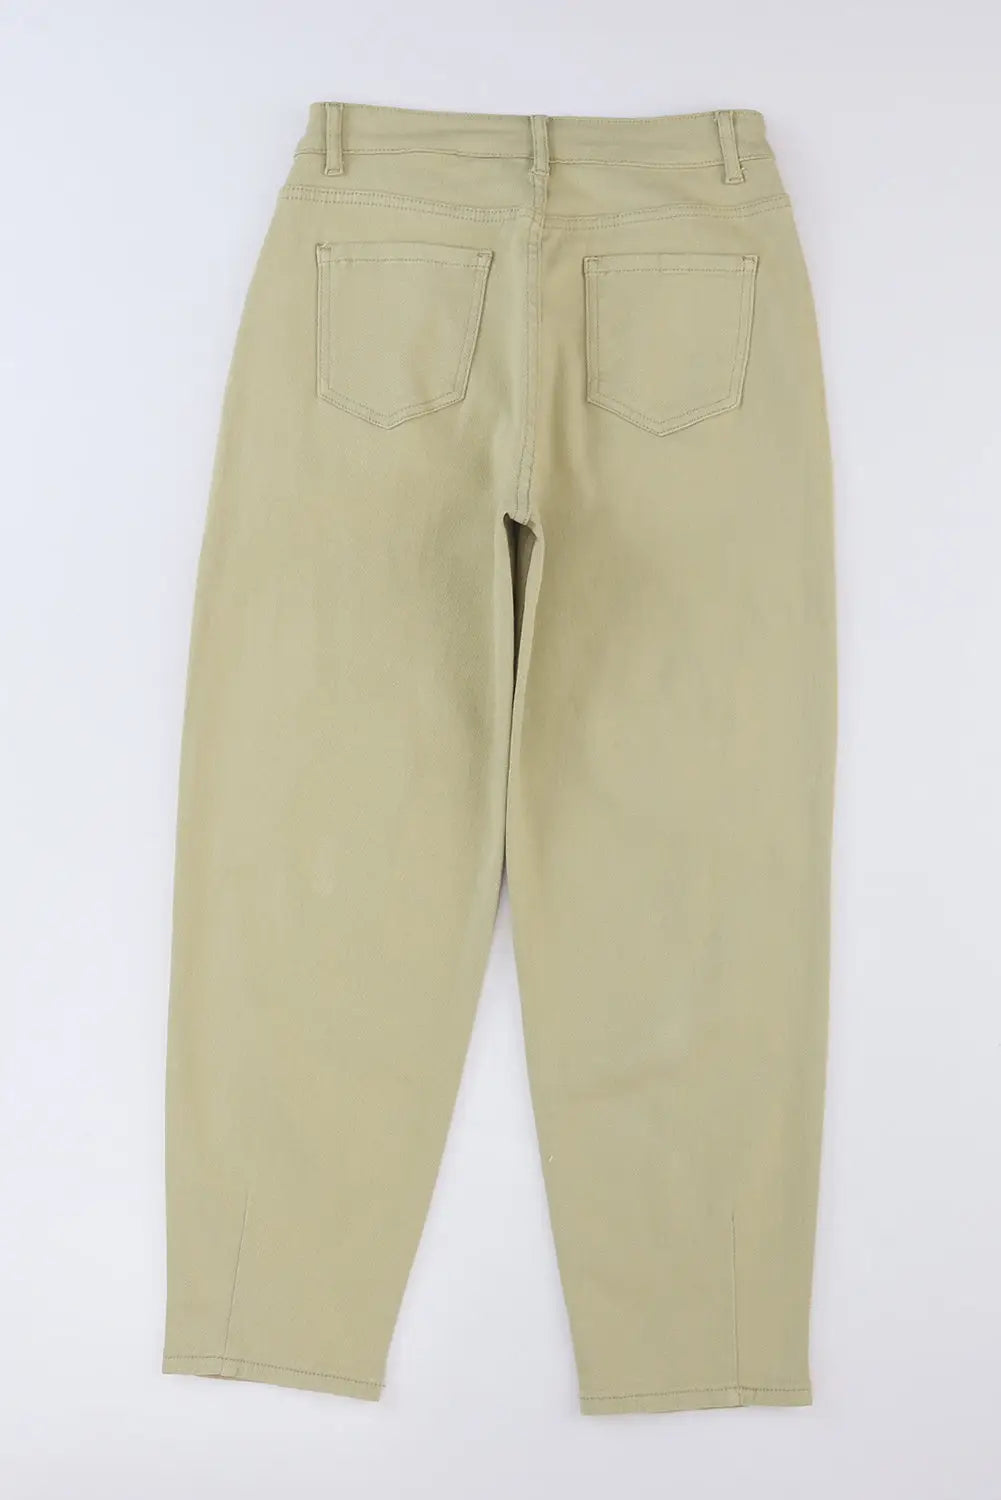 Khaki solid high waist casual pants - cargo